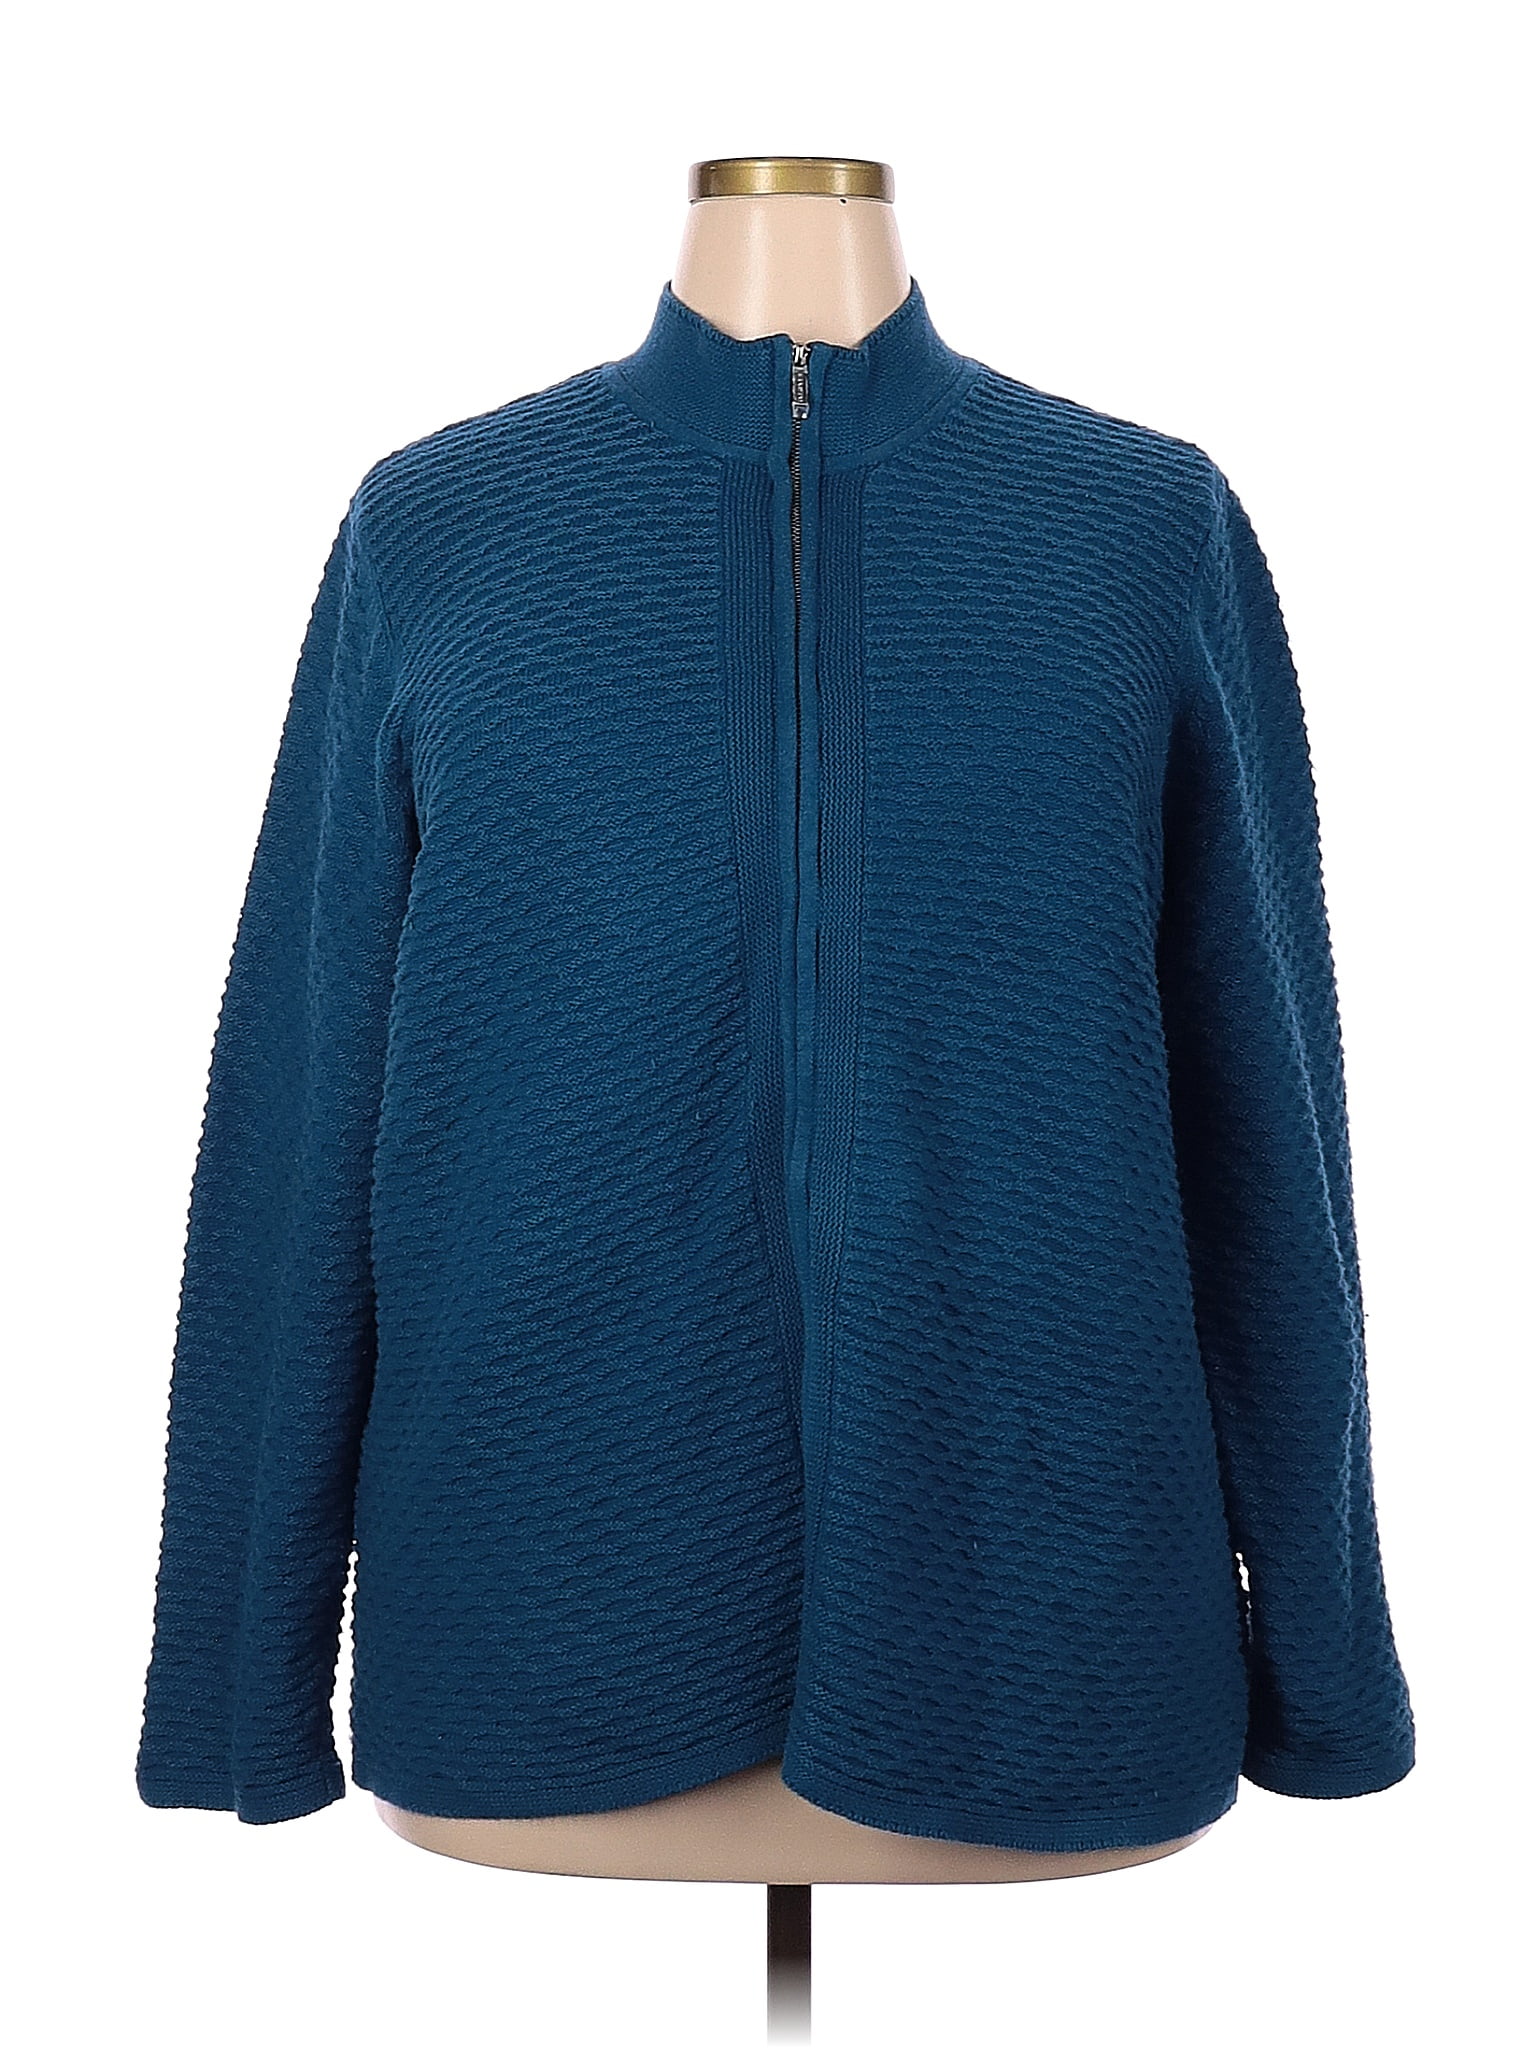 Jones New York Blue Jacket Size 3X (Plus) - 72% off | thredUP